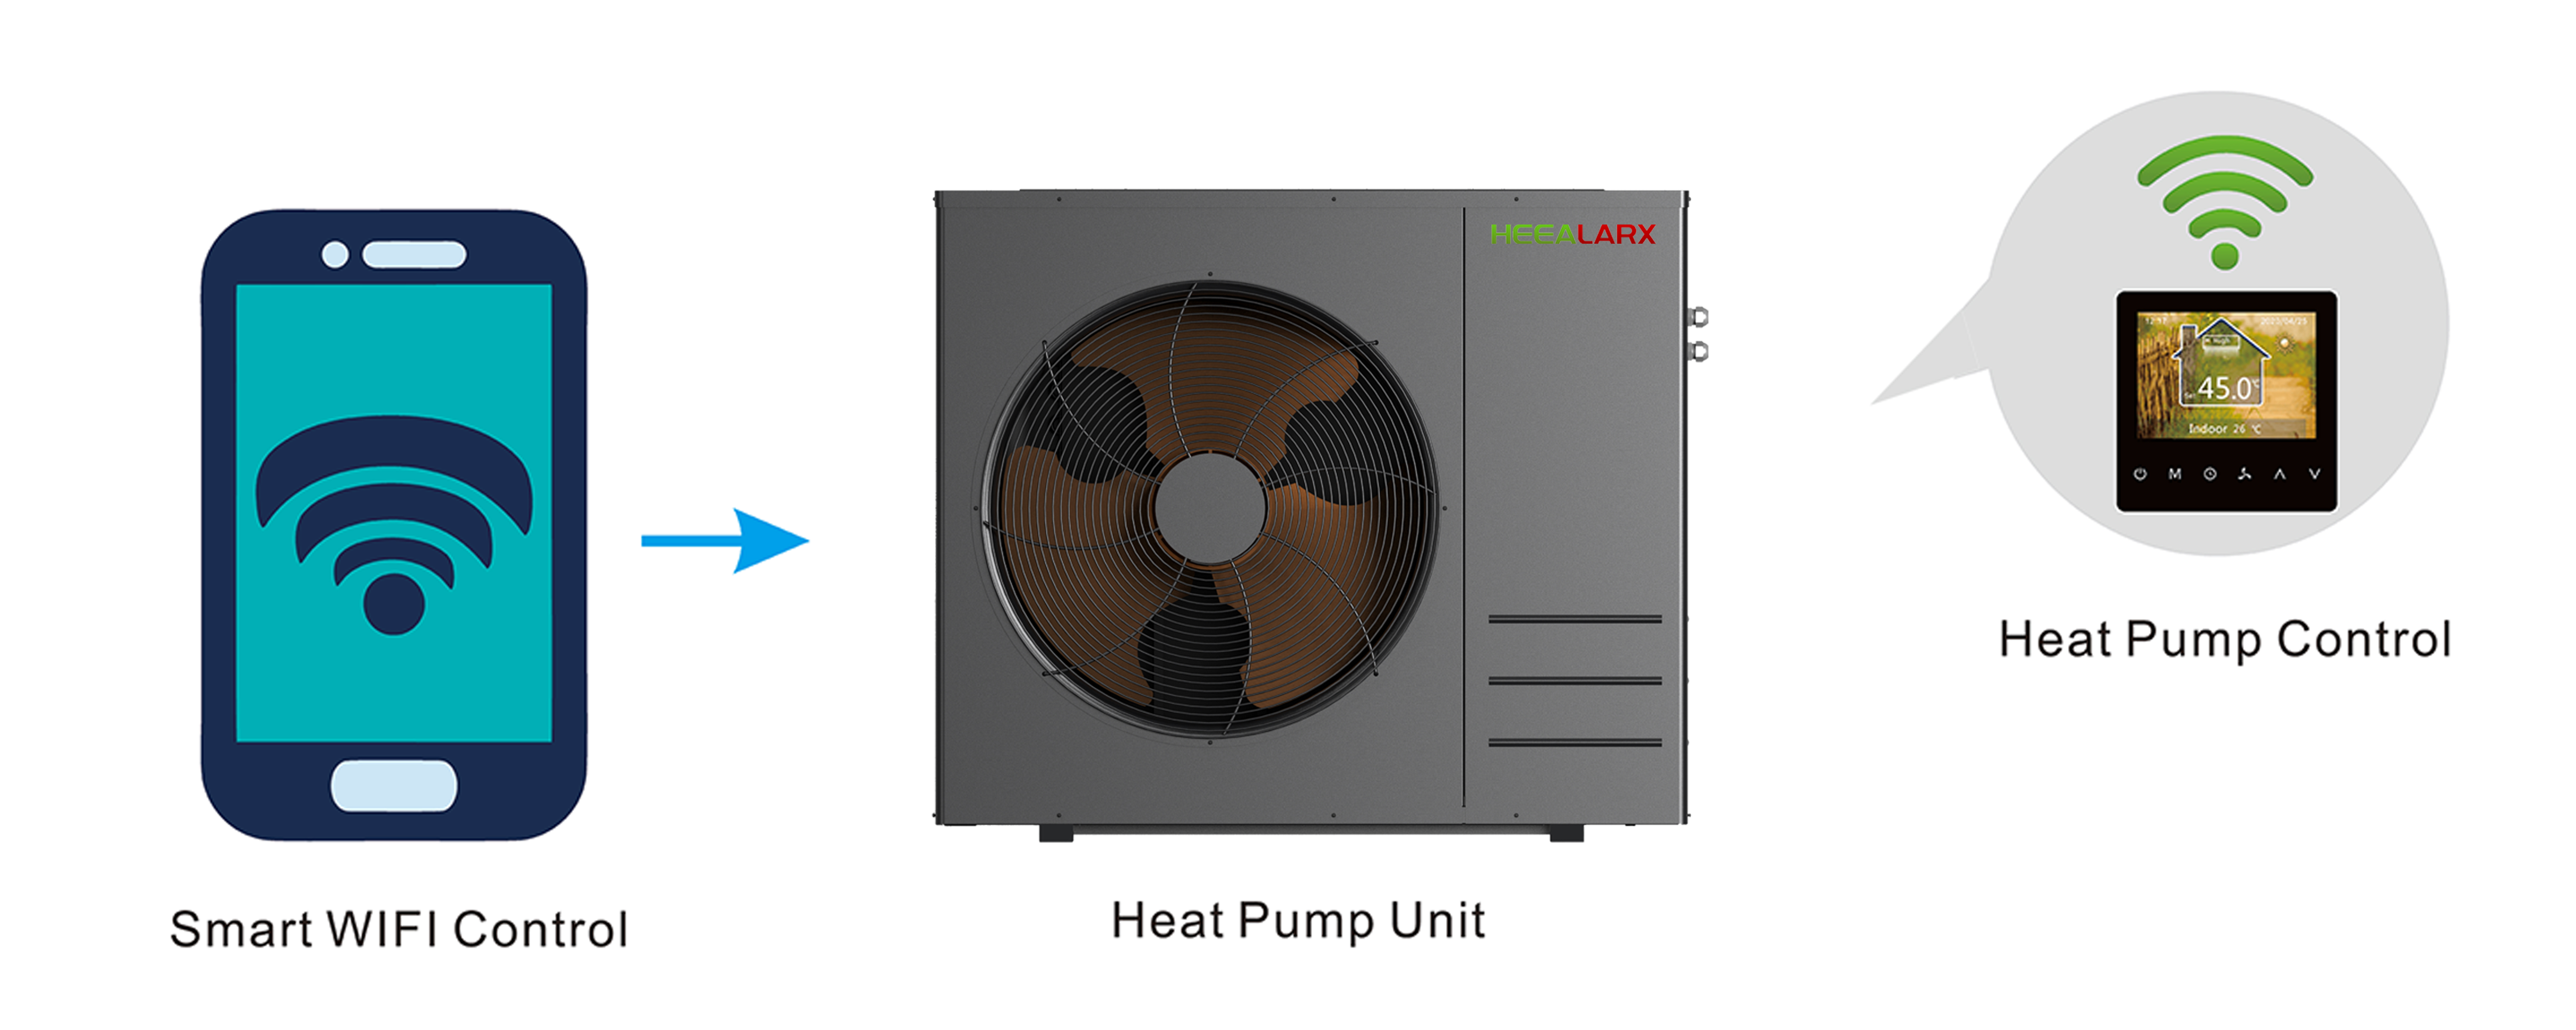 EVI Monoblock Inverter Air Water Heat Pump For Domestic Hot Water Details